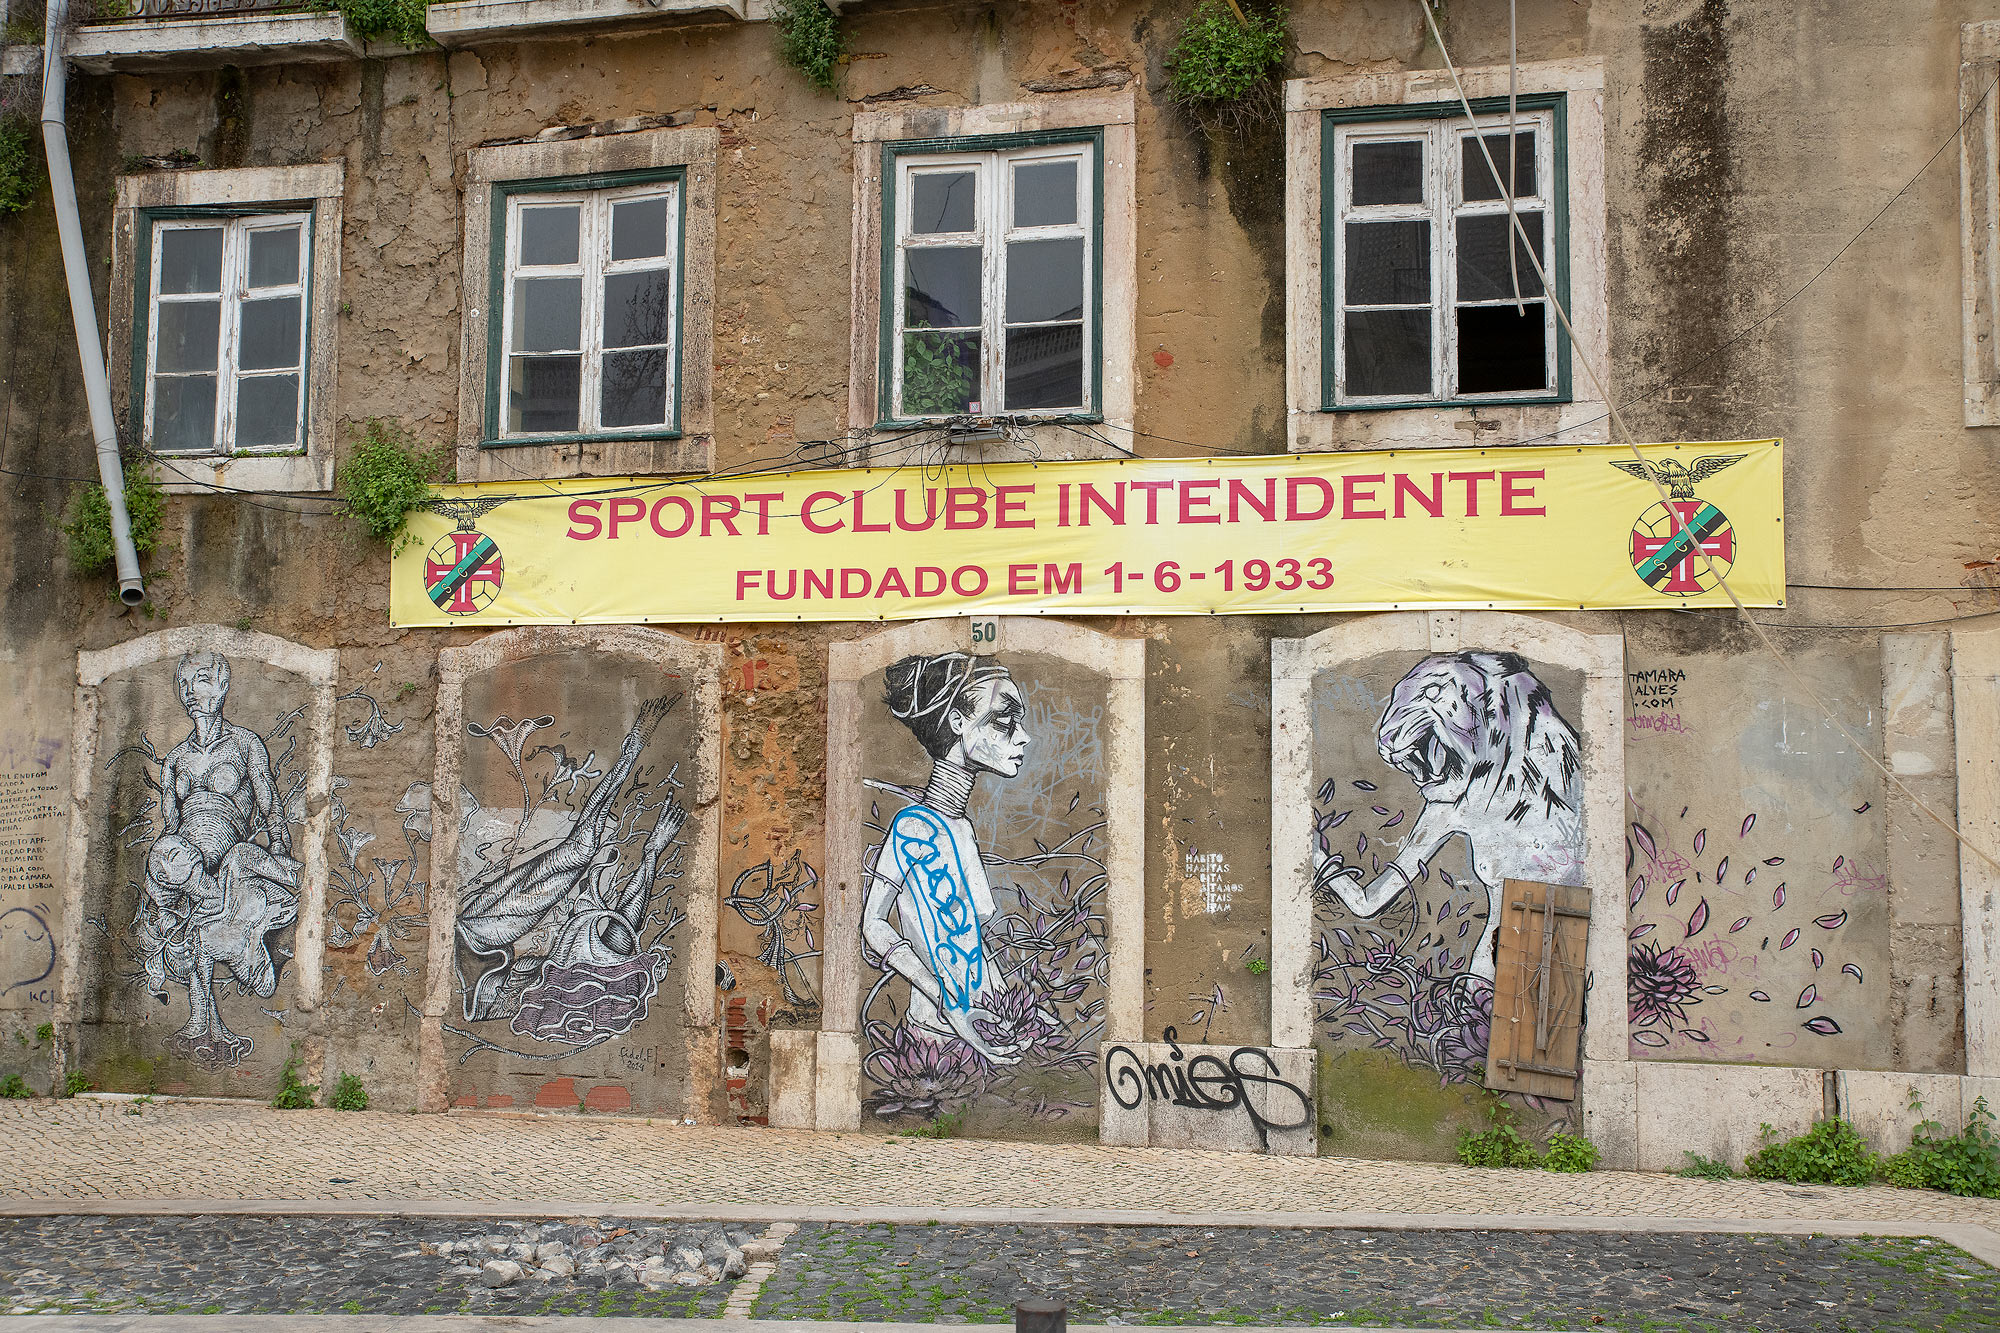 Alternativer Jugendclub "Sport Clube Intendente" in Mouraria